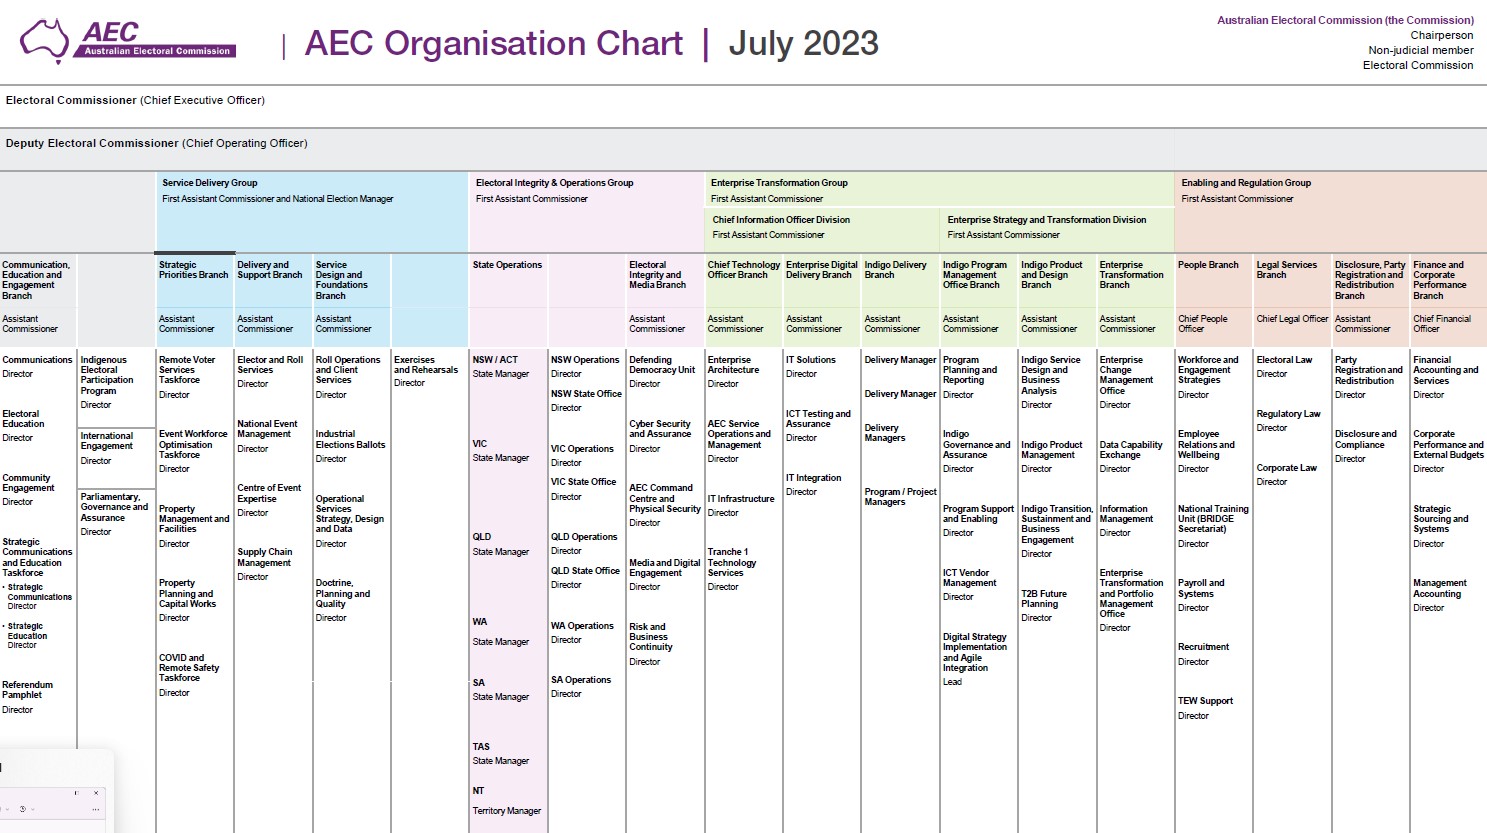 AEC organisational structure - Australian Electoral